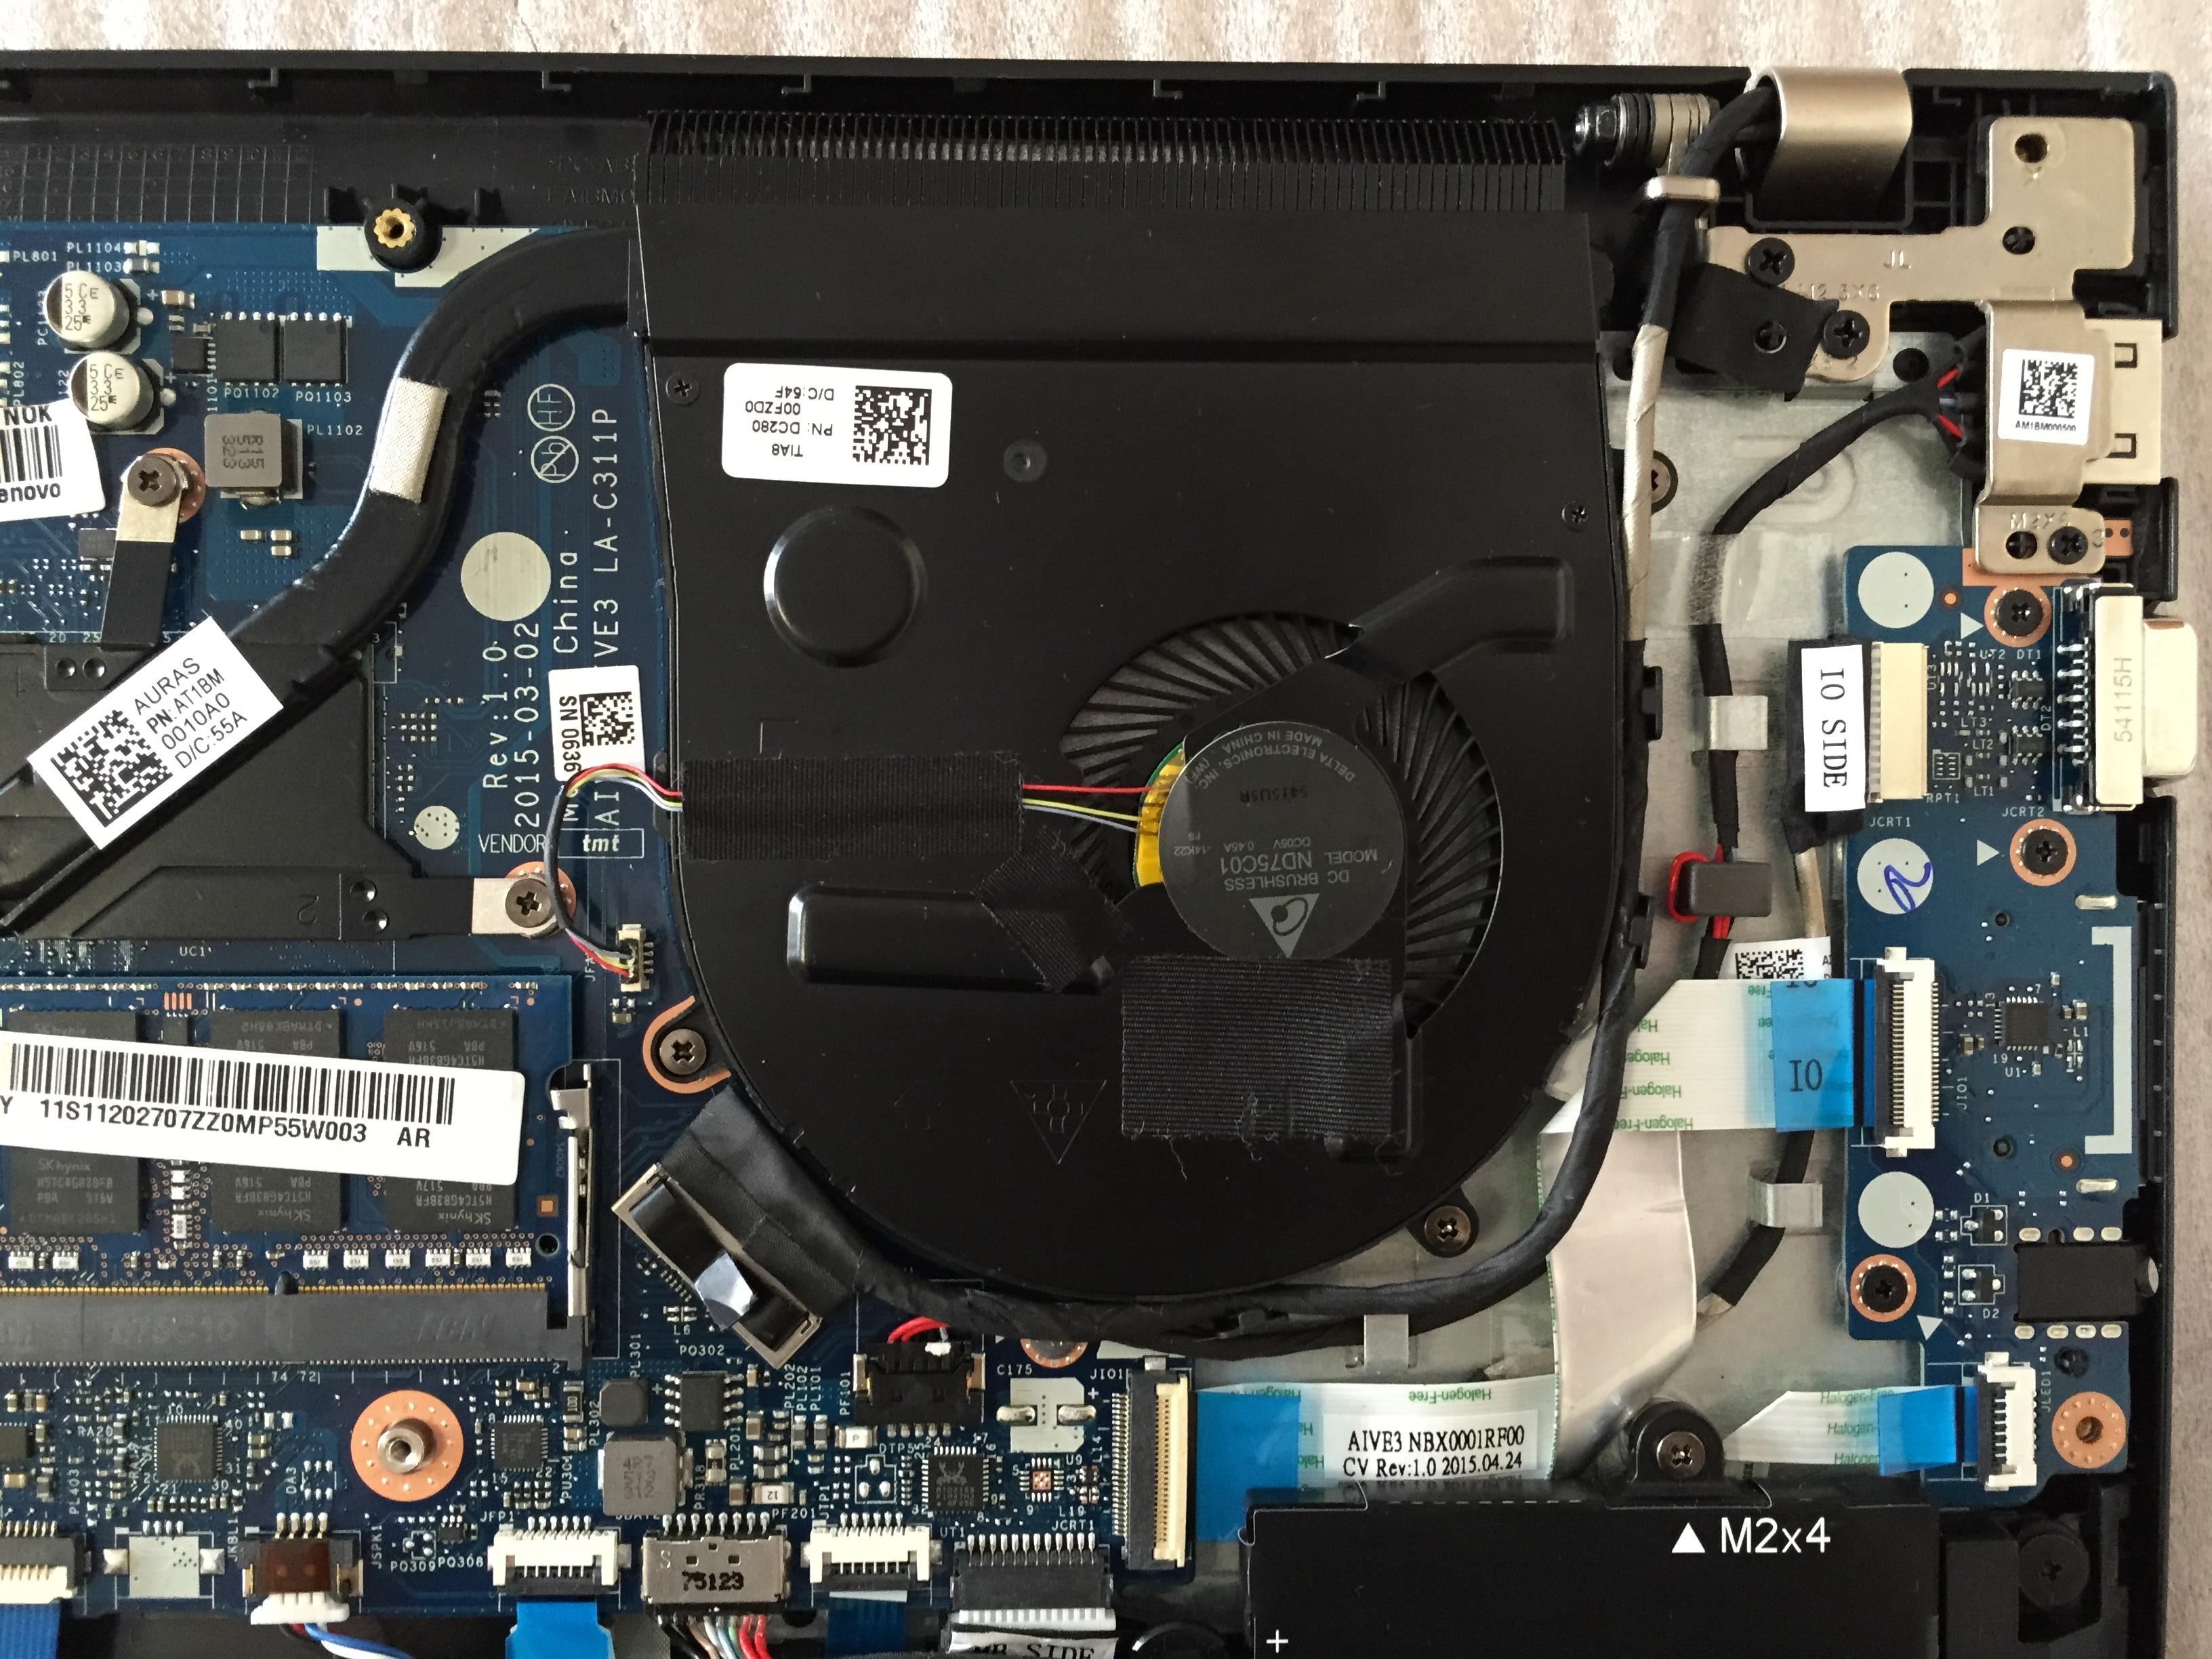 Inside Lenovo E31-70 disassembly, internal photos and upgrade | LaptopMedia.com